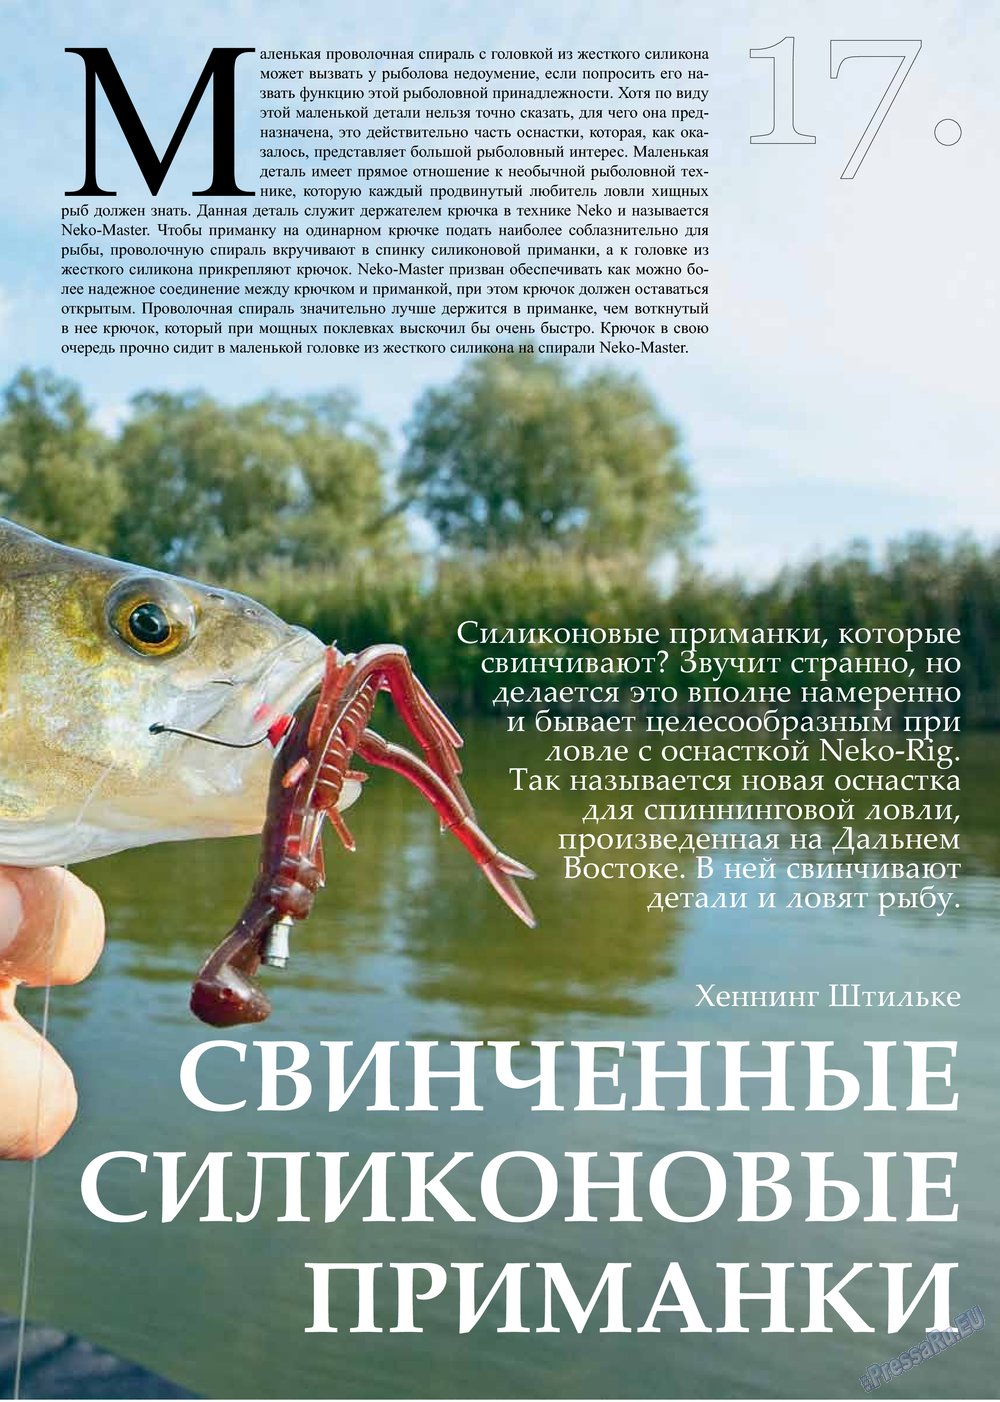 Рыбалка Plus (журнал). 2013 год, номер 2, стр. 17